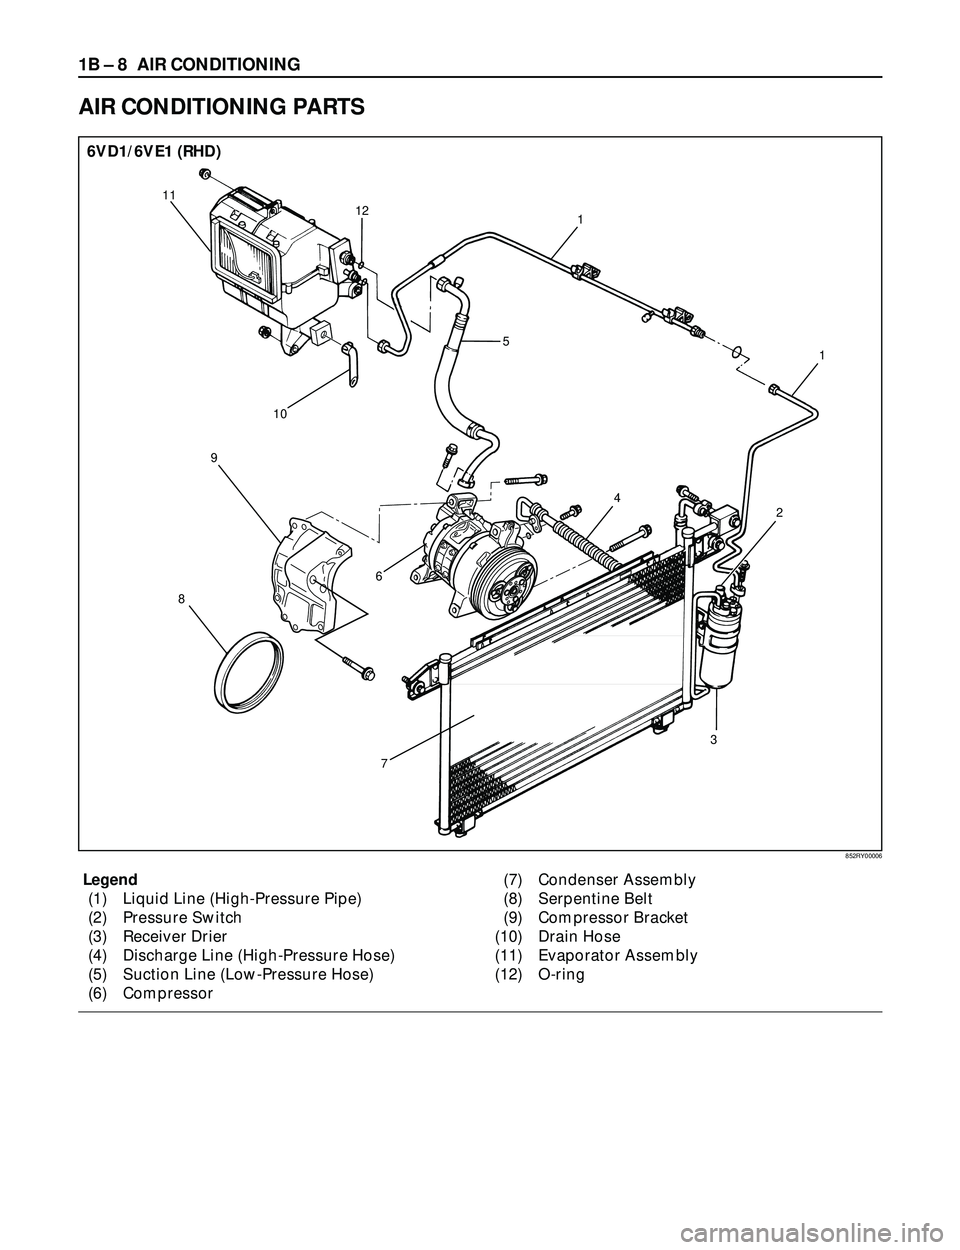 ISUZU TROOPER 1998  Service Repair Manual 1B Ð 8 AIR CONDITIONING
AIR CONDITIONING PARTS
Legend
(1) Liquid Line (High-Pressure Pipe)
(2) Pressure Switch
(3) Receiver Drier
(4) Discharge Line (High-Pressure Hose)
(5) Suction Line (Low-Pressur